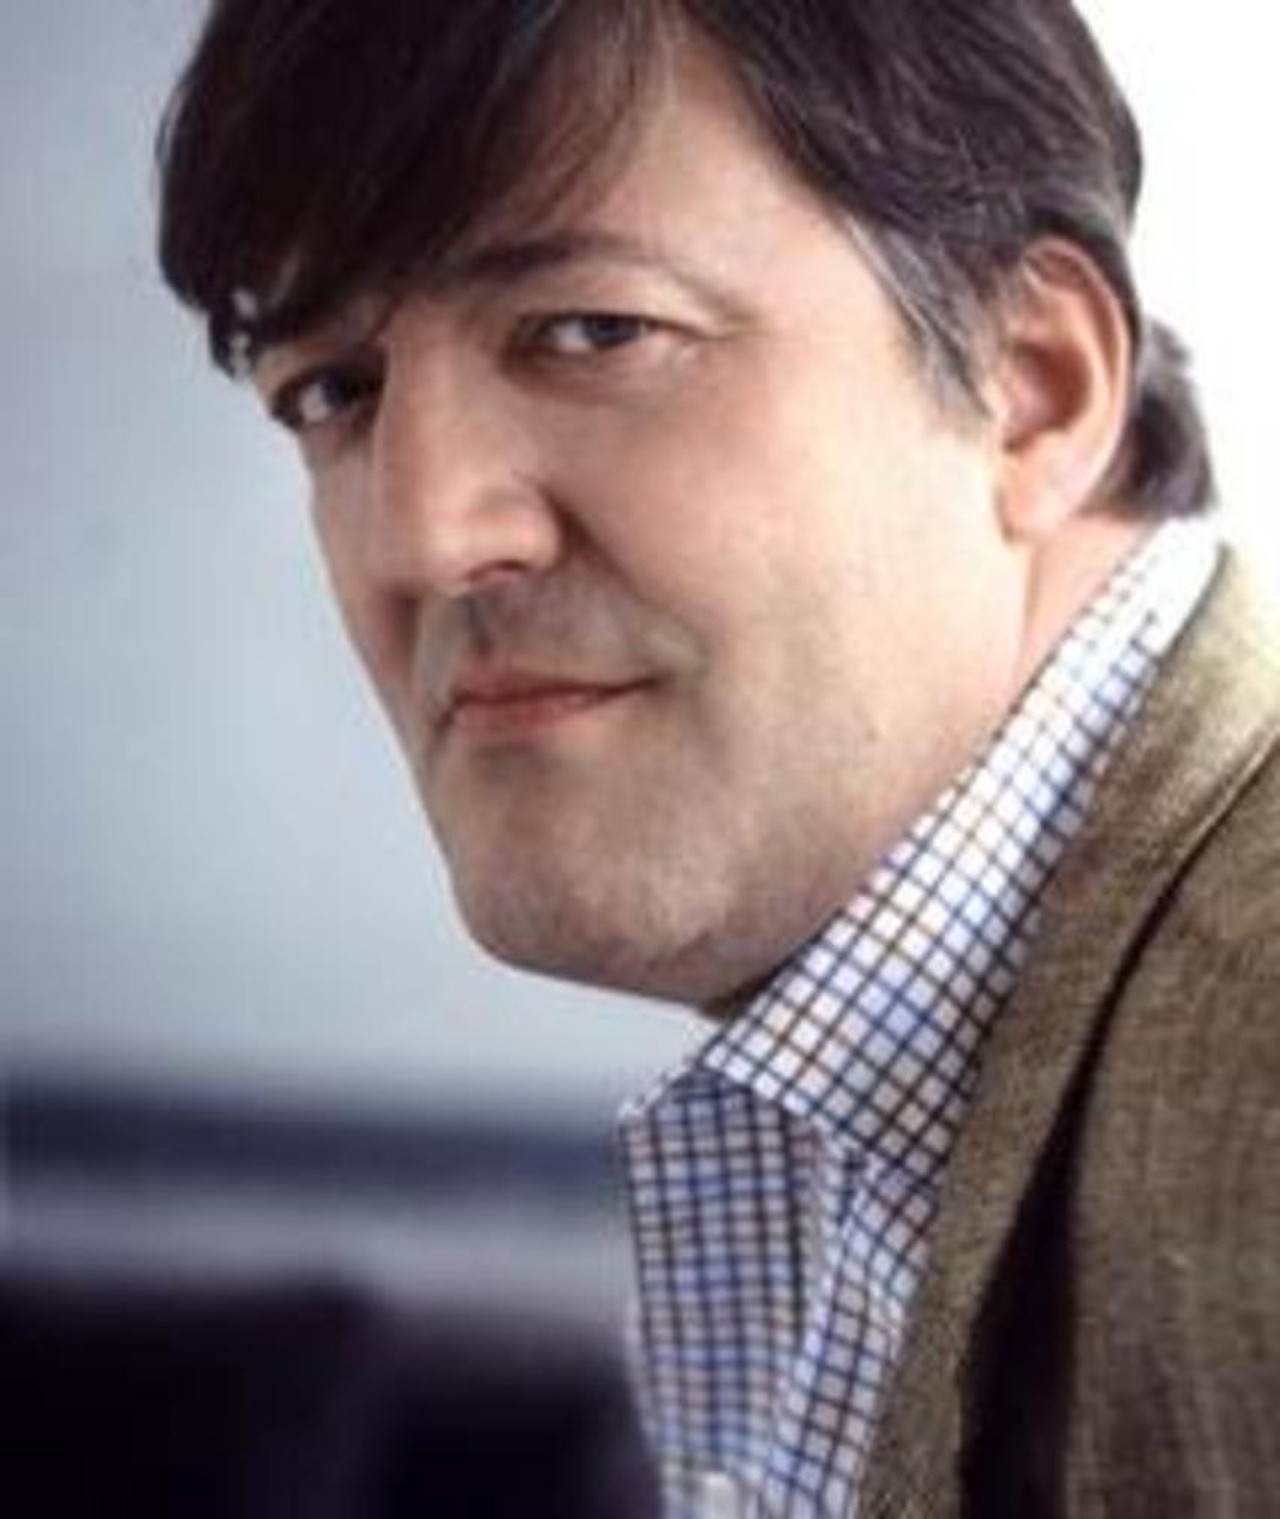 Photo of Stephen Fry